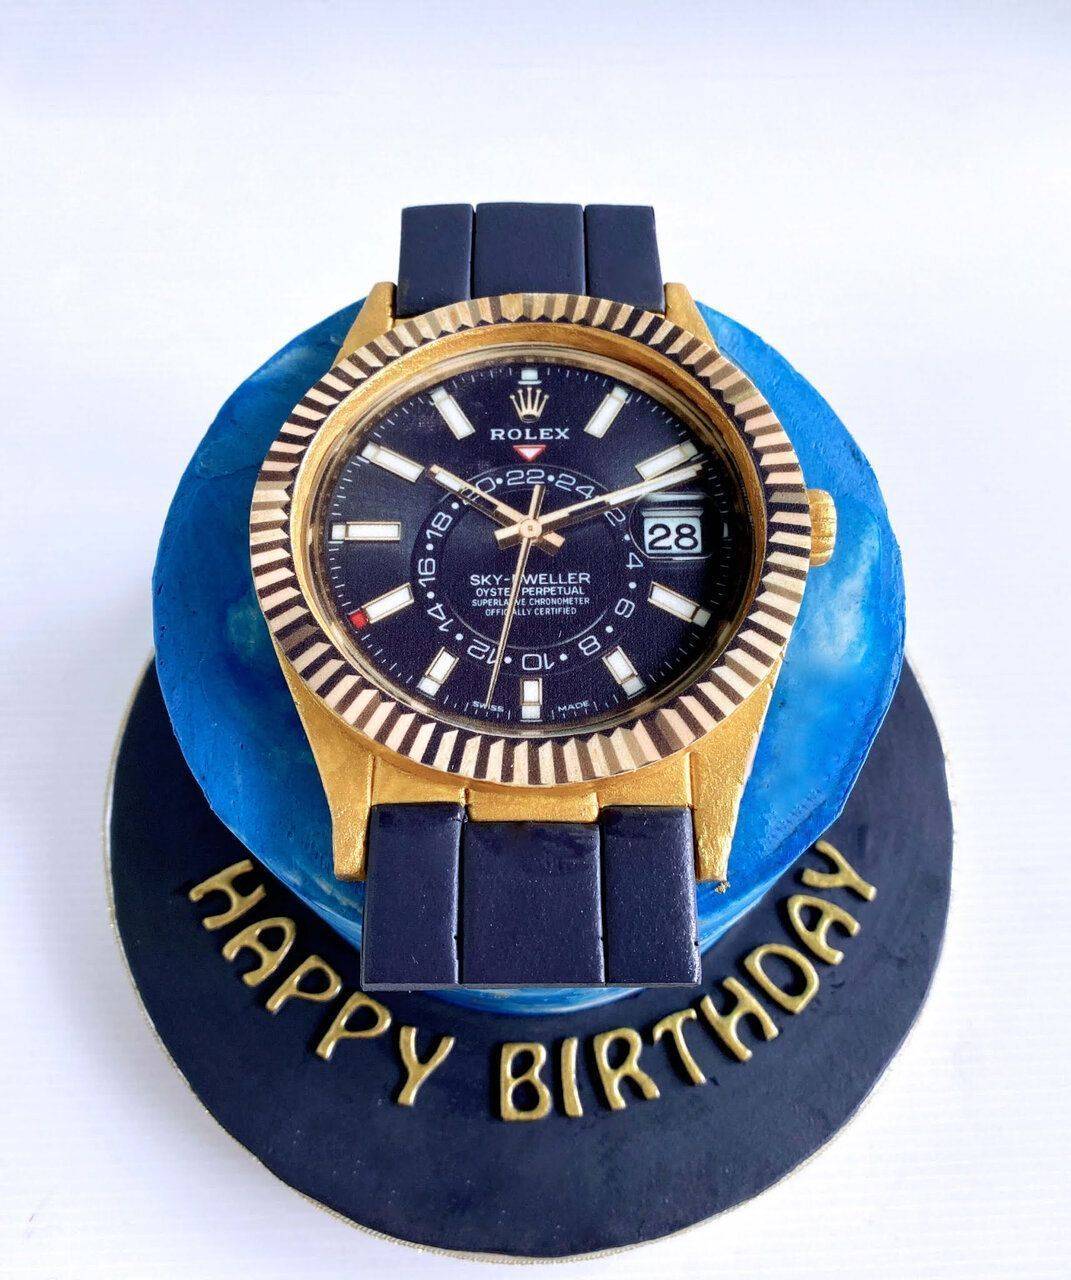 Rolex watch cake chucakes.jpg